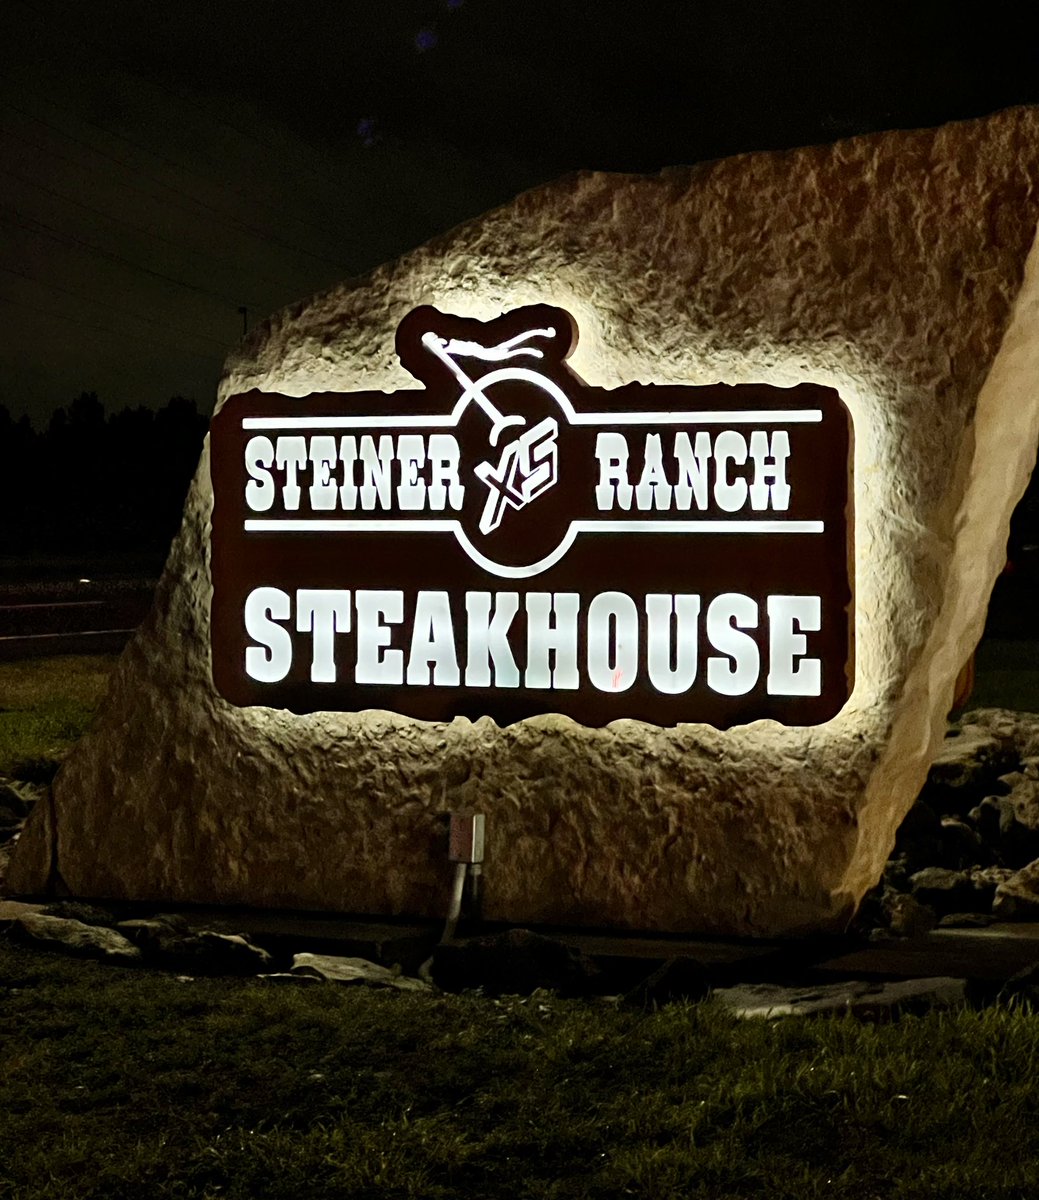 Steiner Ranch Steakhouse is always the right choice #atx #ATX #austineats #austinfood #steinerranchsteakhouse